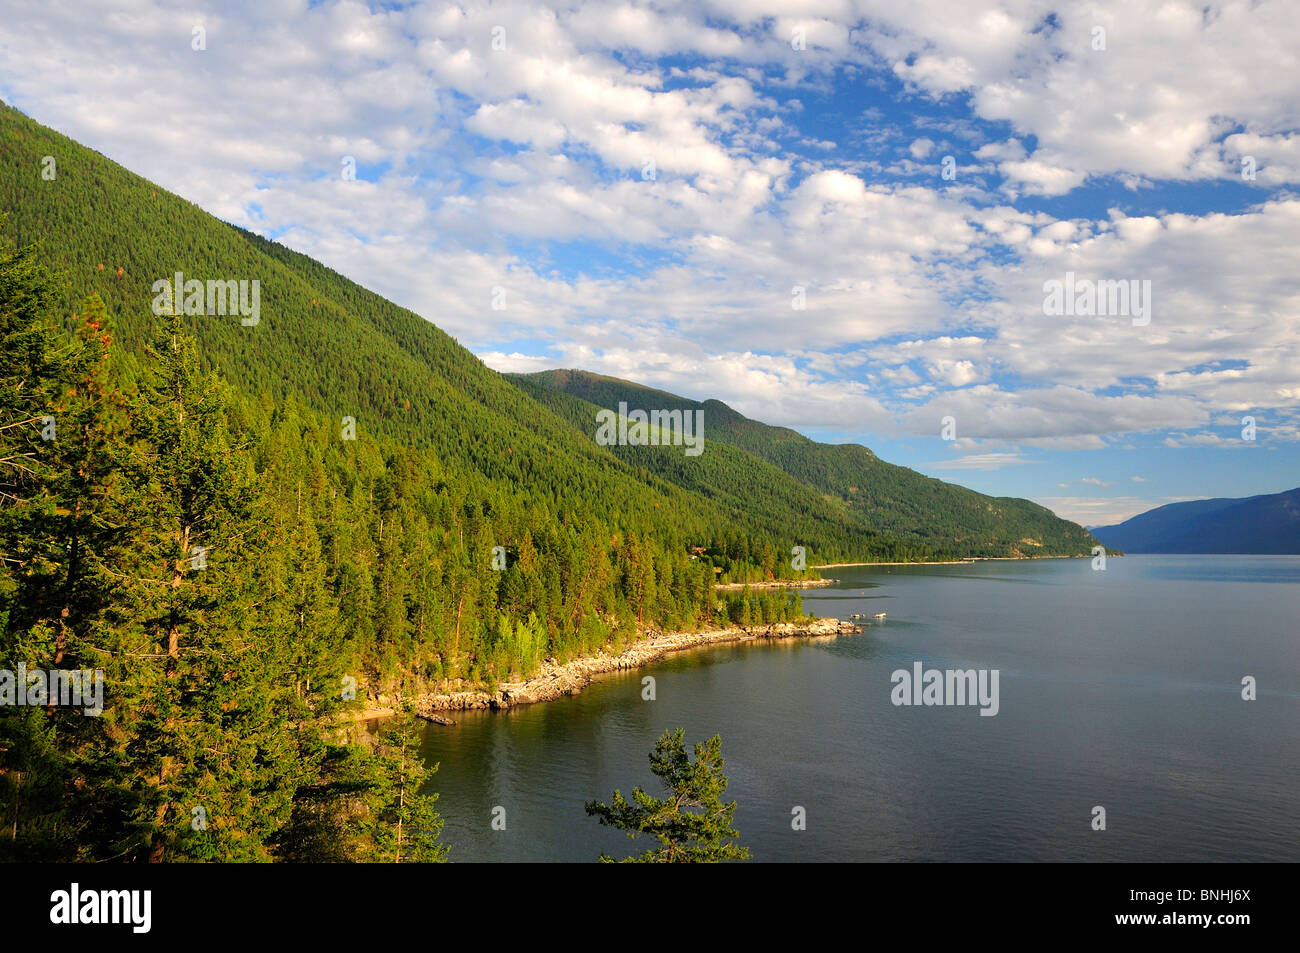 Kanada Kootenay Lake in der Nähe von Crawford Bay British Columbia felsigen Berge Rockies Natur Landschaft Landschaft Wald Stockfoto